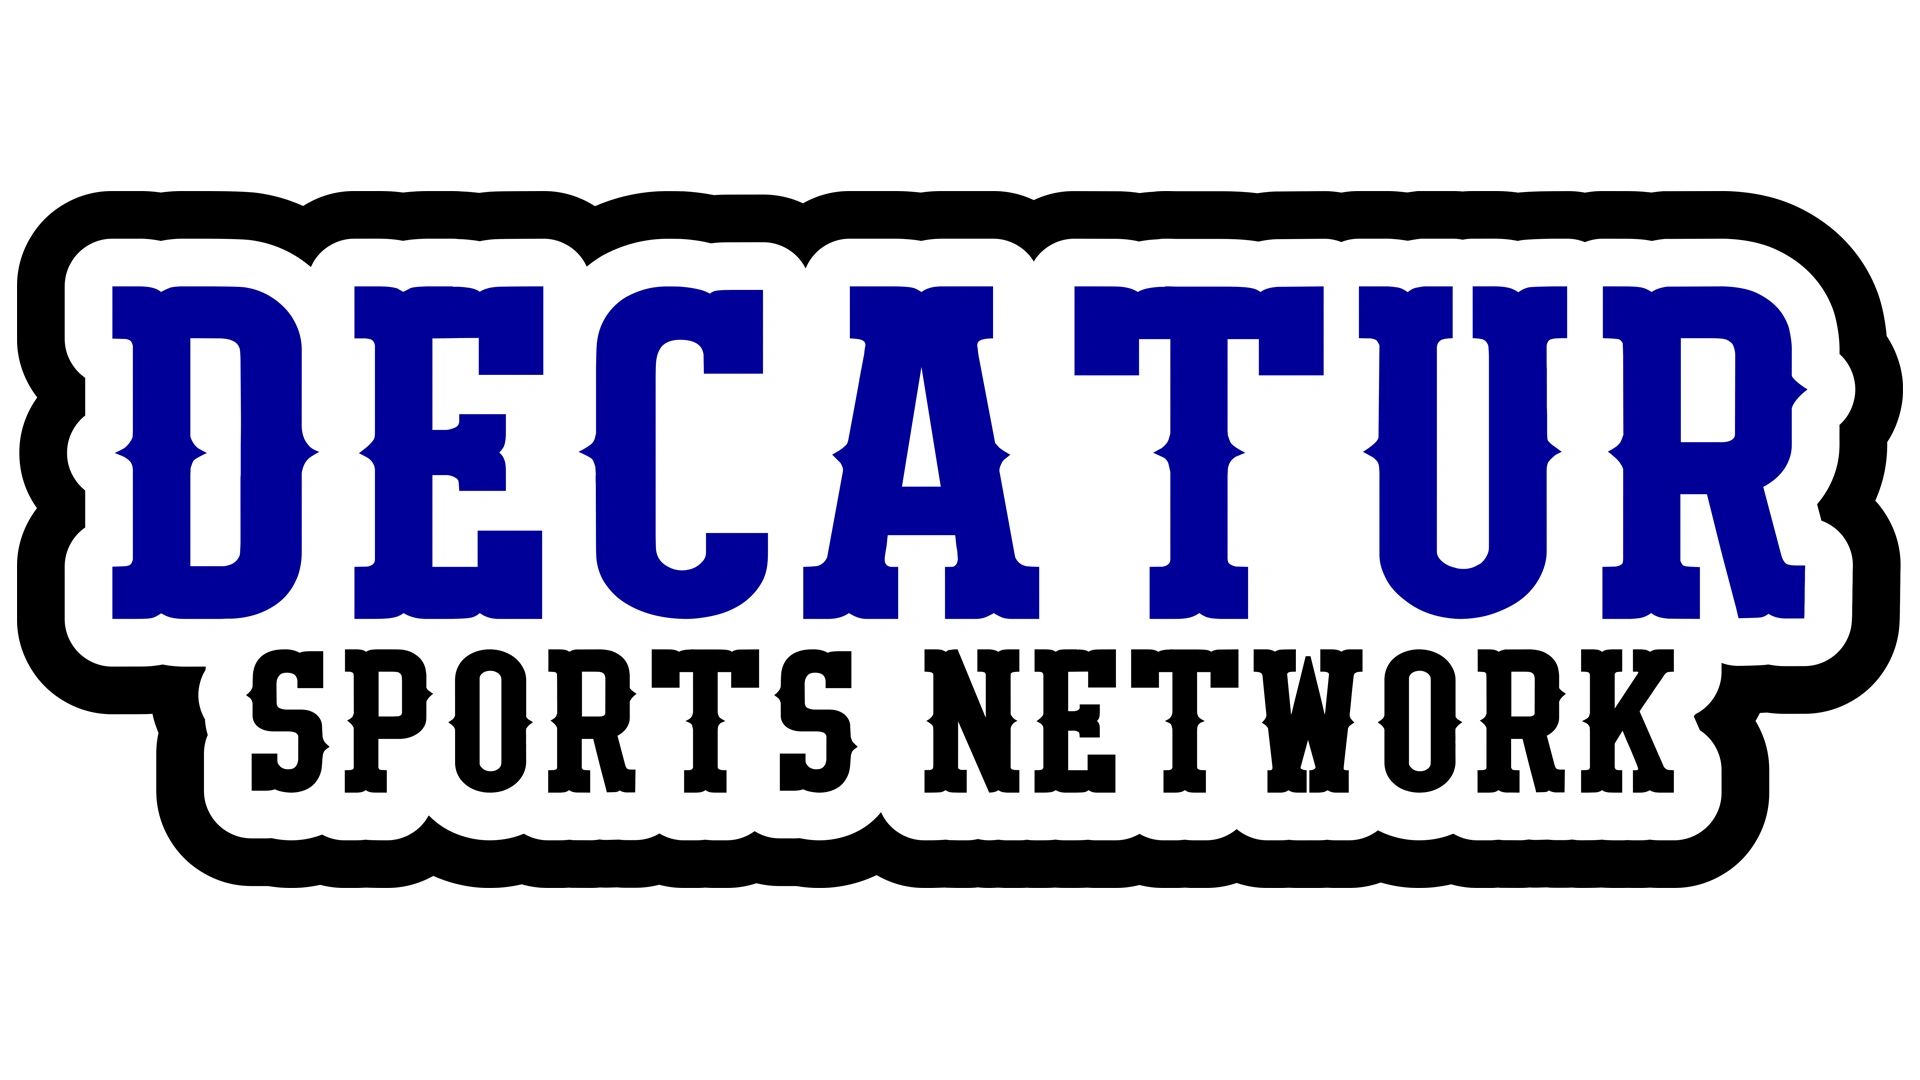 Lets GO, MetsWorldwide Sports Radio Network